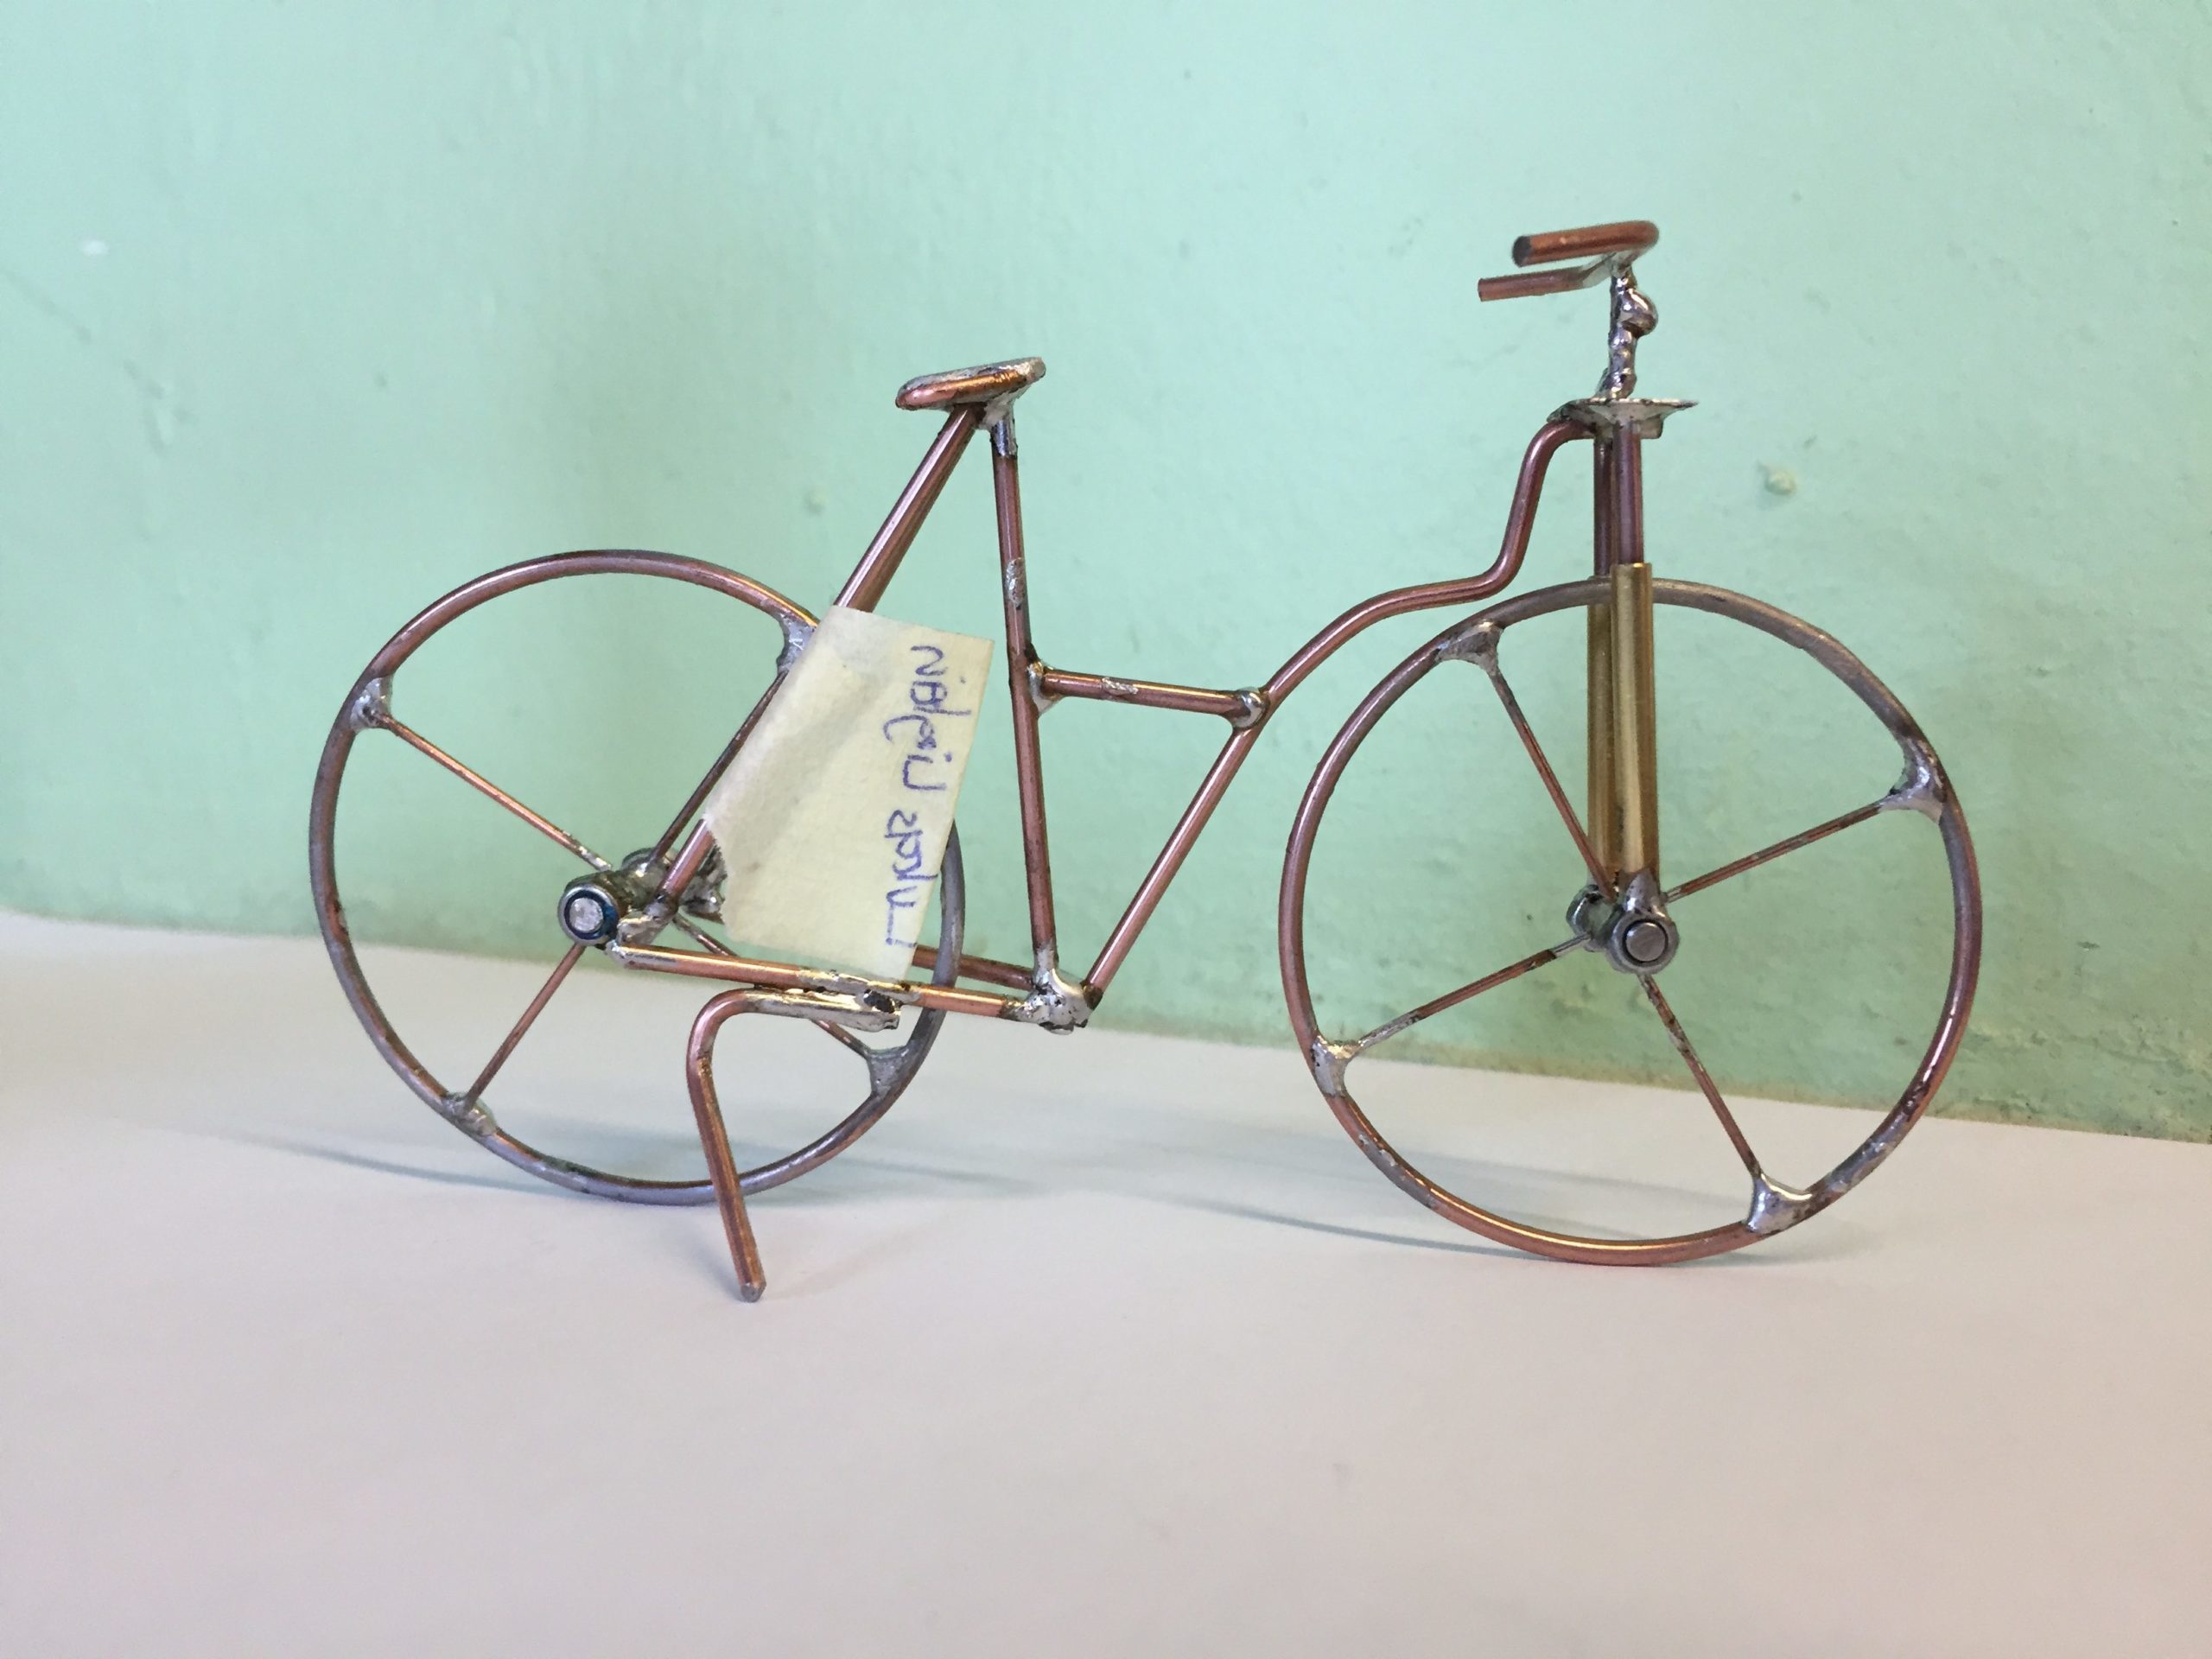 Gut gelötet: Achtklässler kreieren kunstvolle Fahrradmodelle